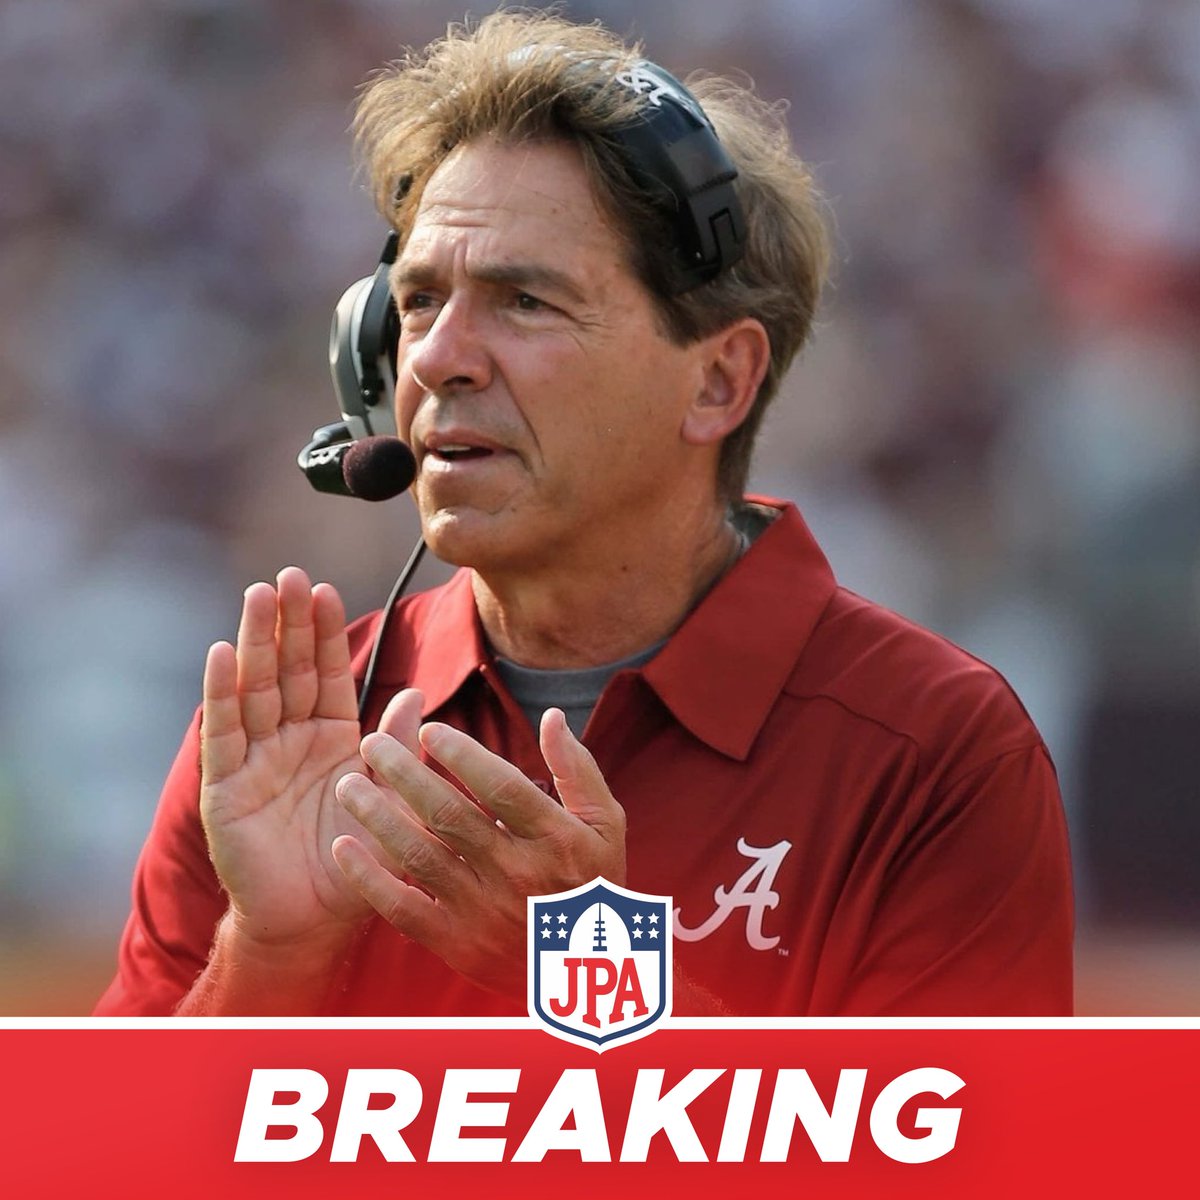 𝗕𝗥𝗘𝗔𝗞𝗜𝗡𝗚: Longtime Alabama head coach Nick Saban is retiring, per @ClowESPN Absolutely massive news. End of an era.